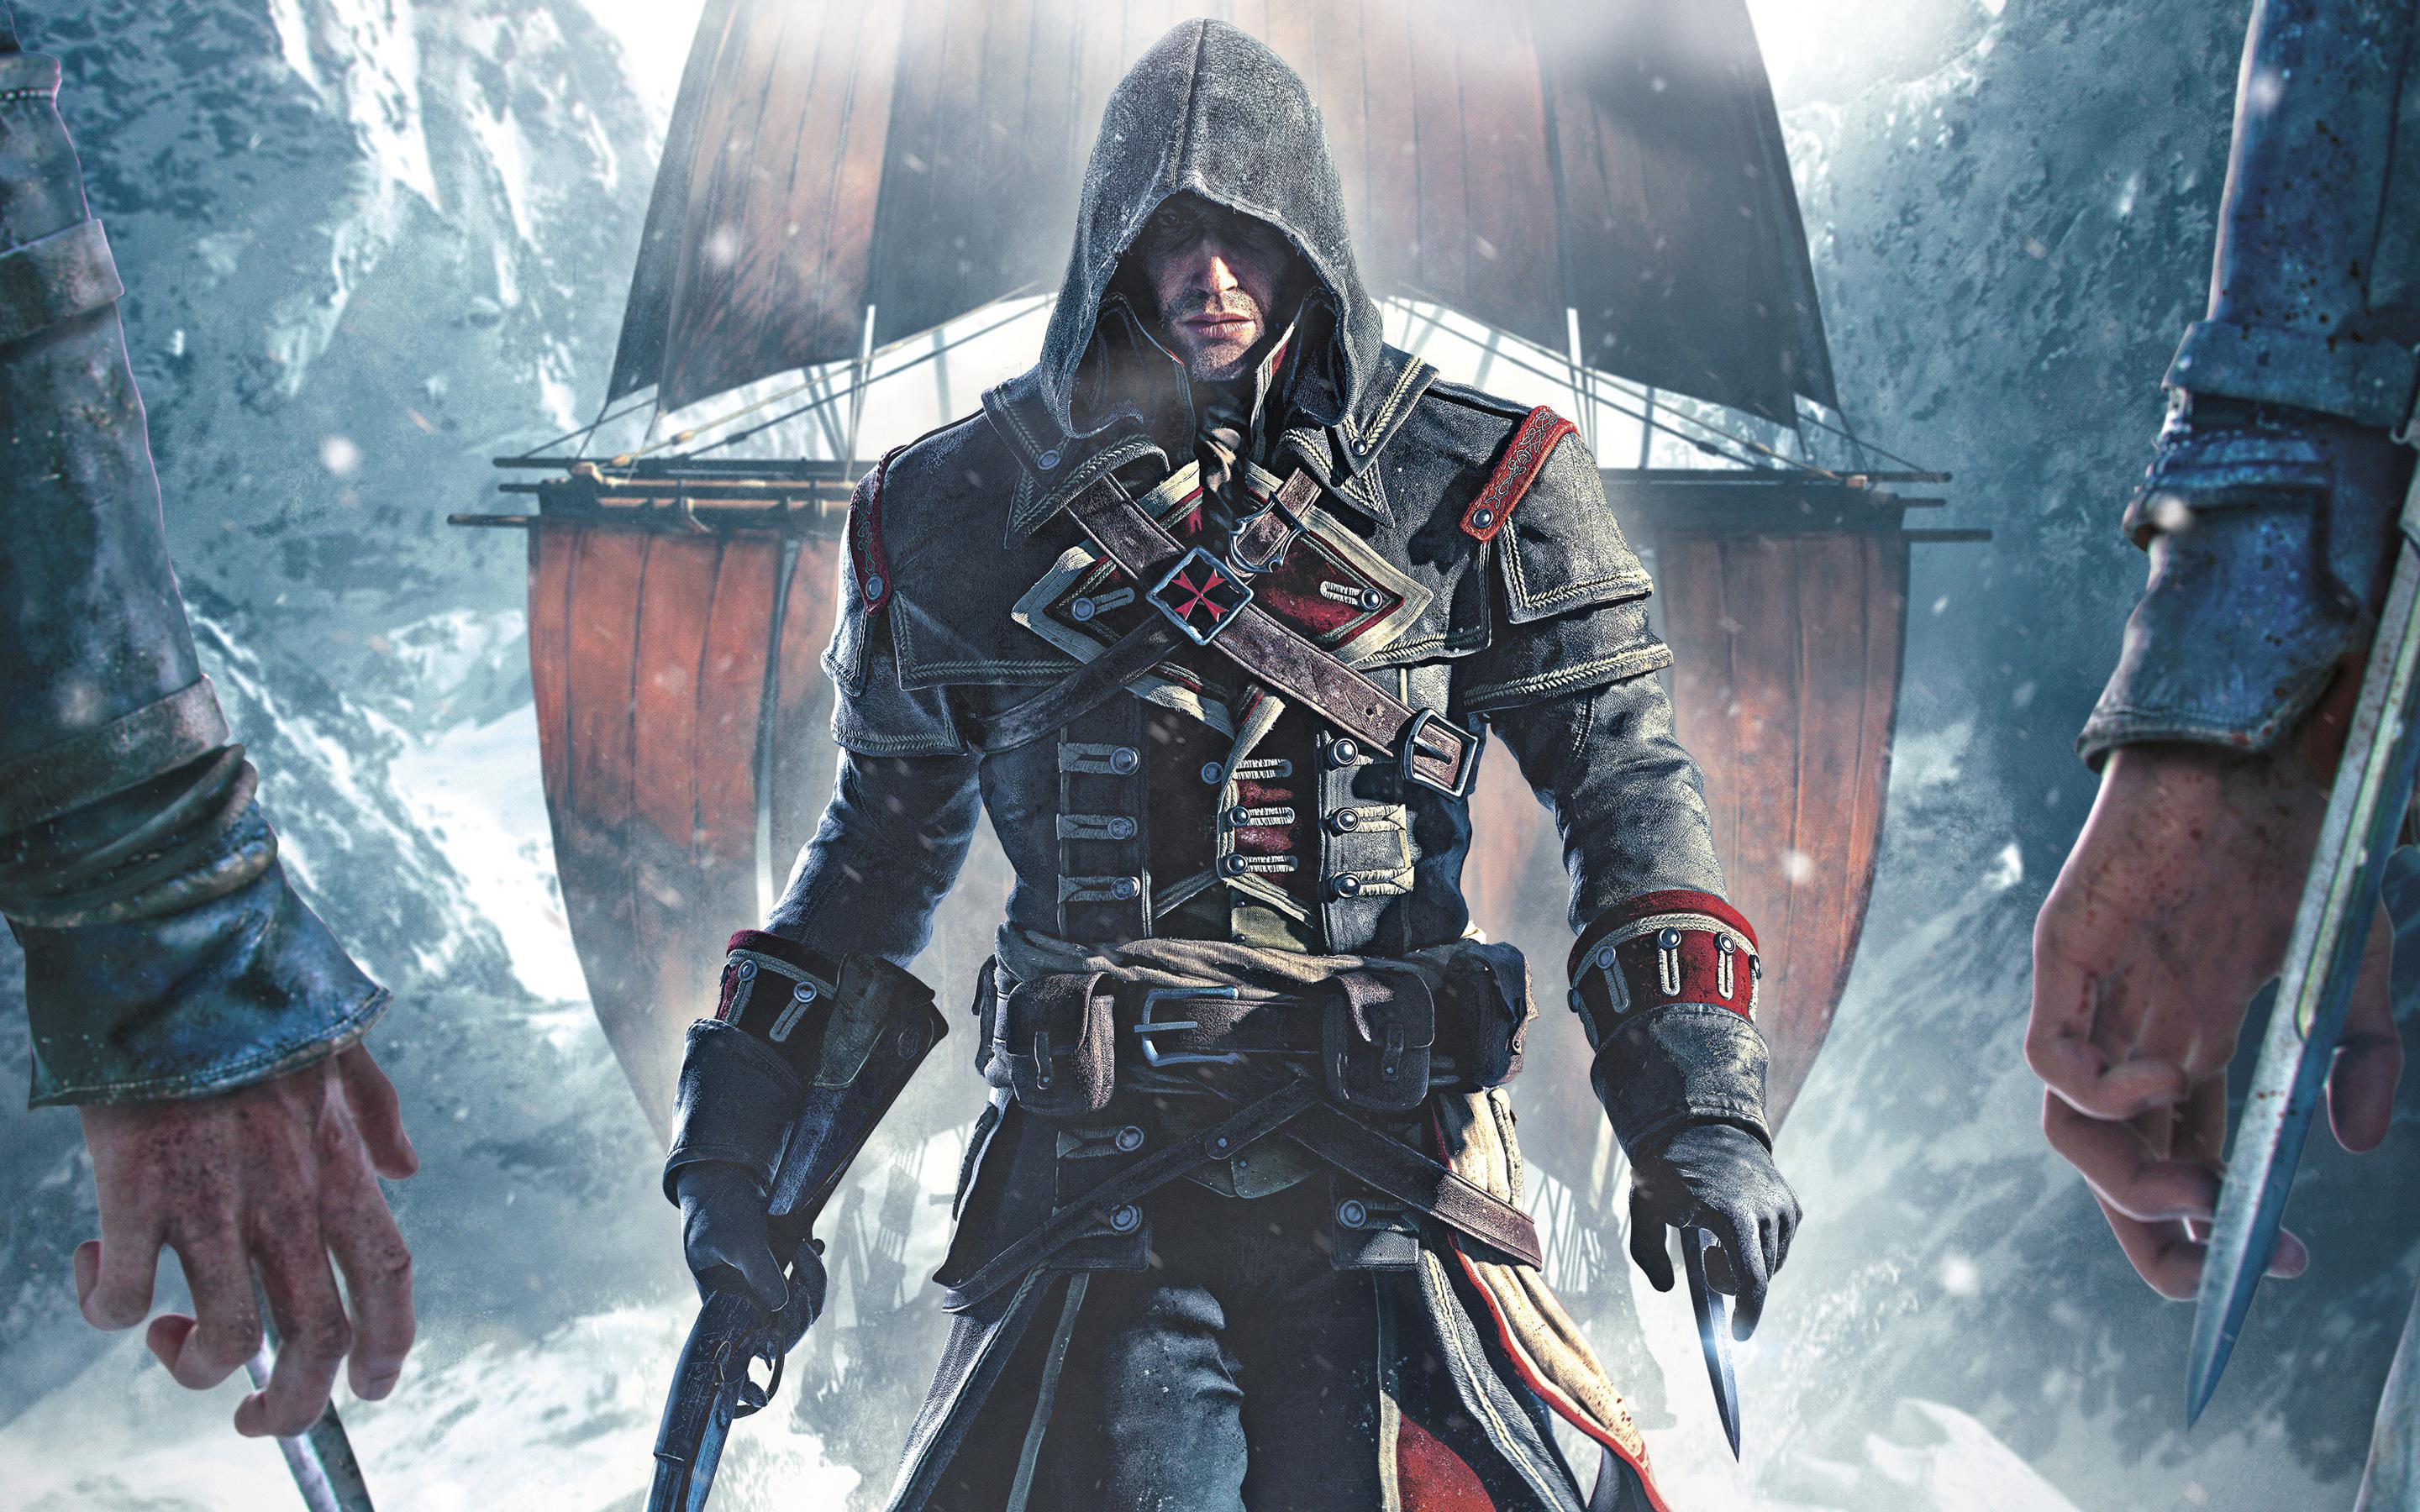 Assassin's Creed Rogue Wallpaper